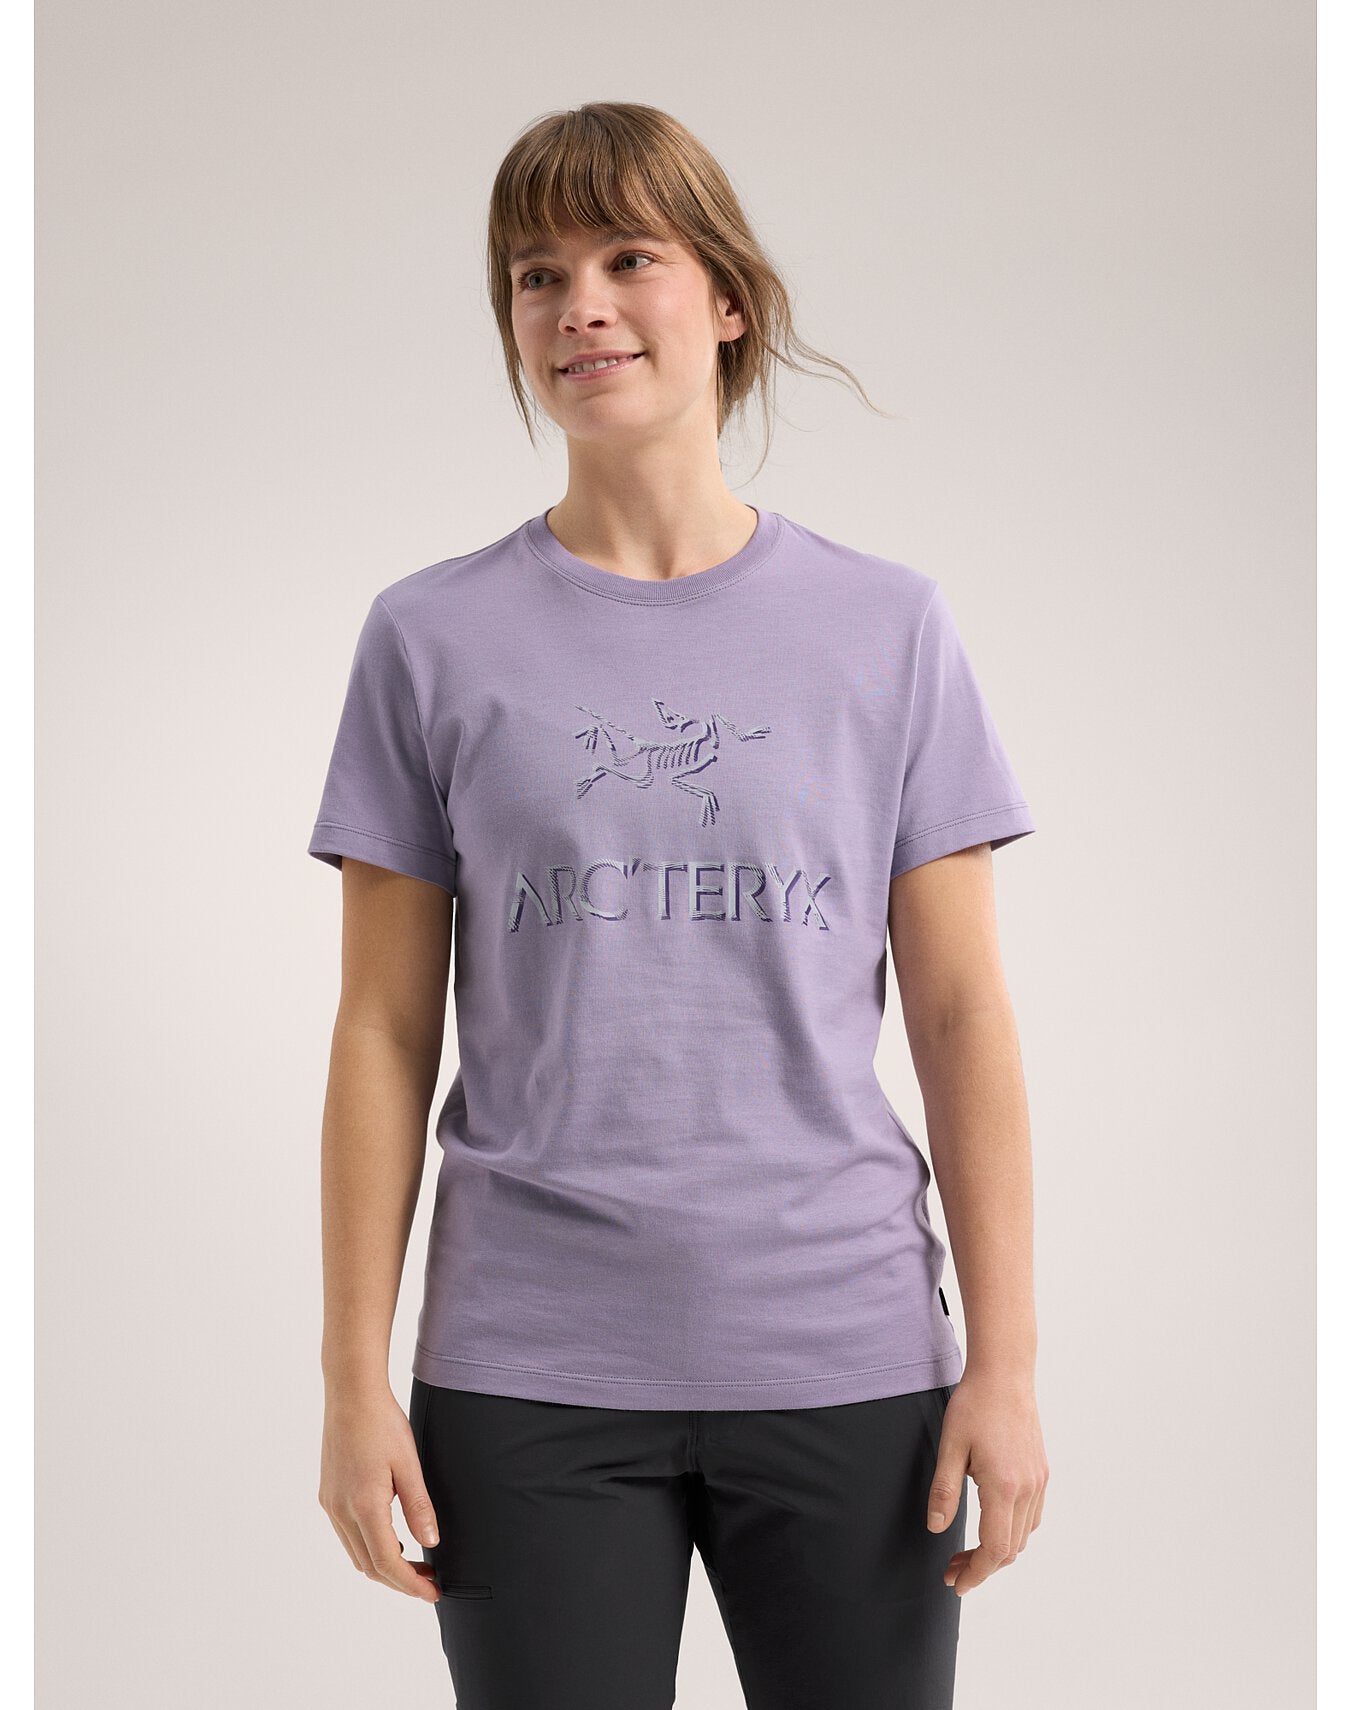 S24-X000008135-Arc-Word-Cotton-T-Shirt-Velocity-Women-s-Front-View.jpg